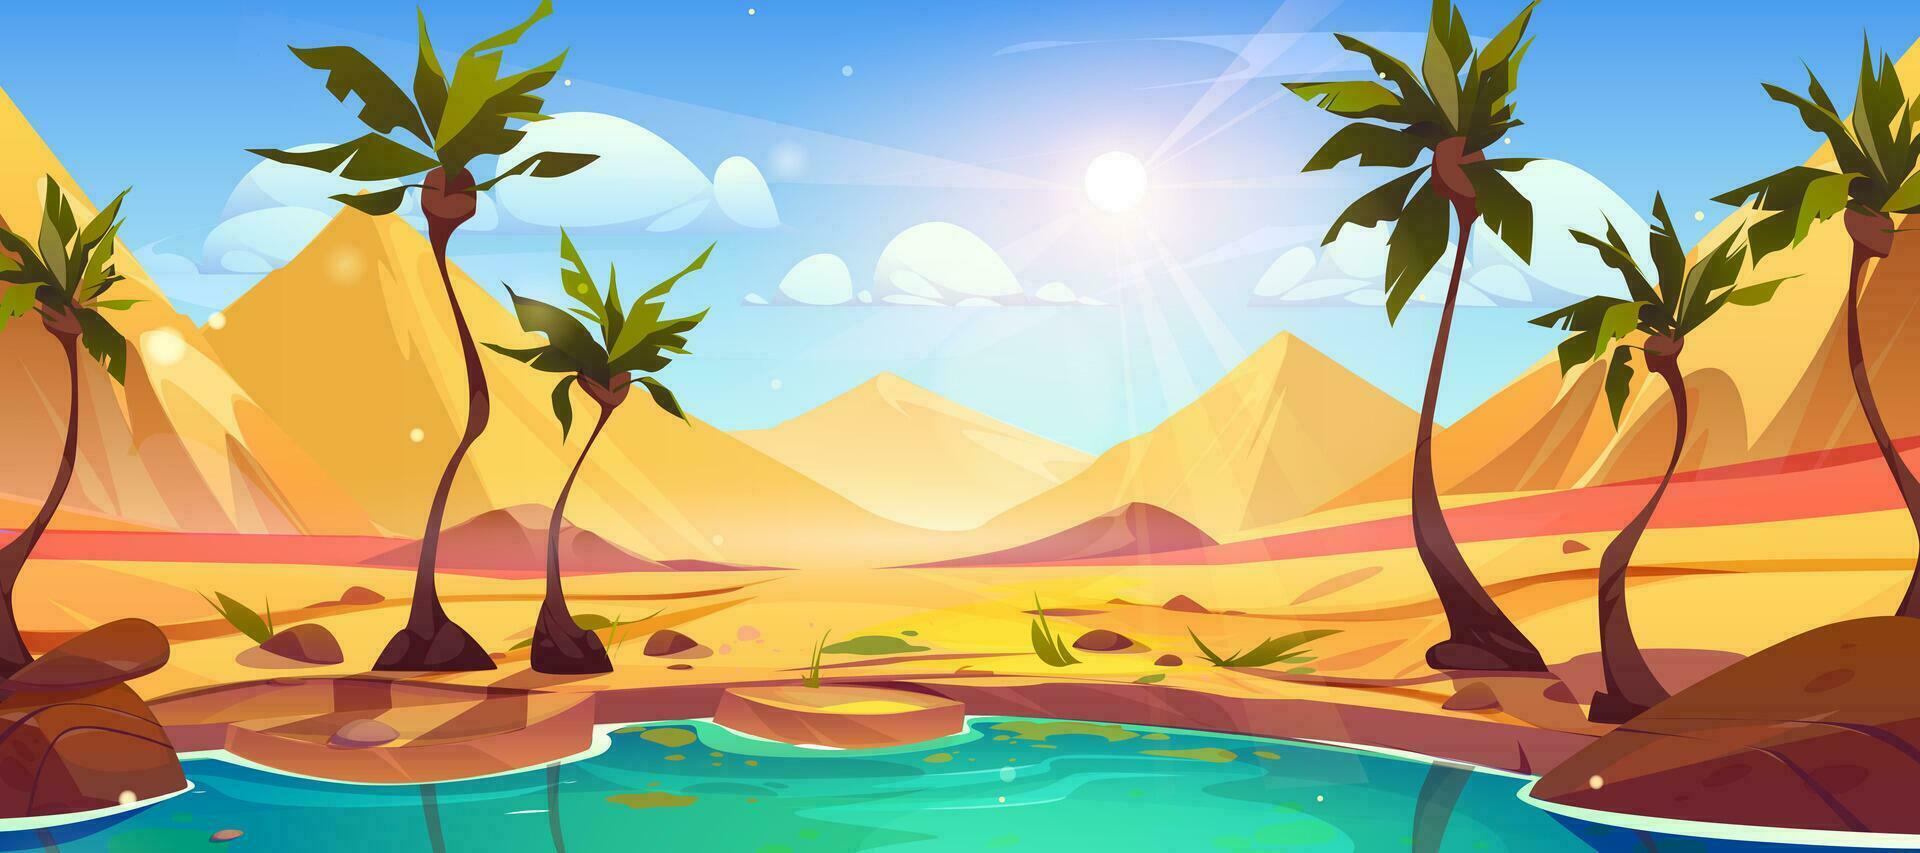 desenho animado oásis dentro sahara deserto com Palma panorama vetor